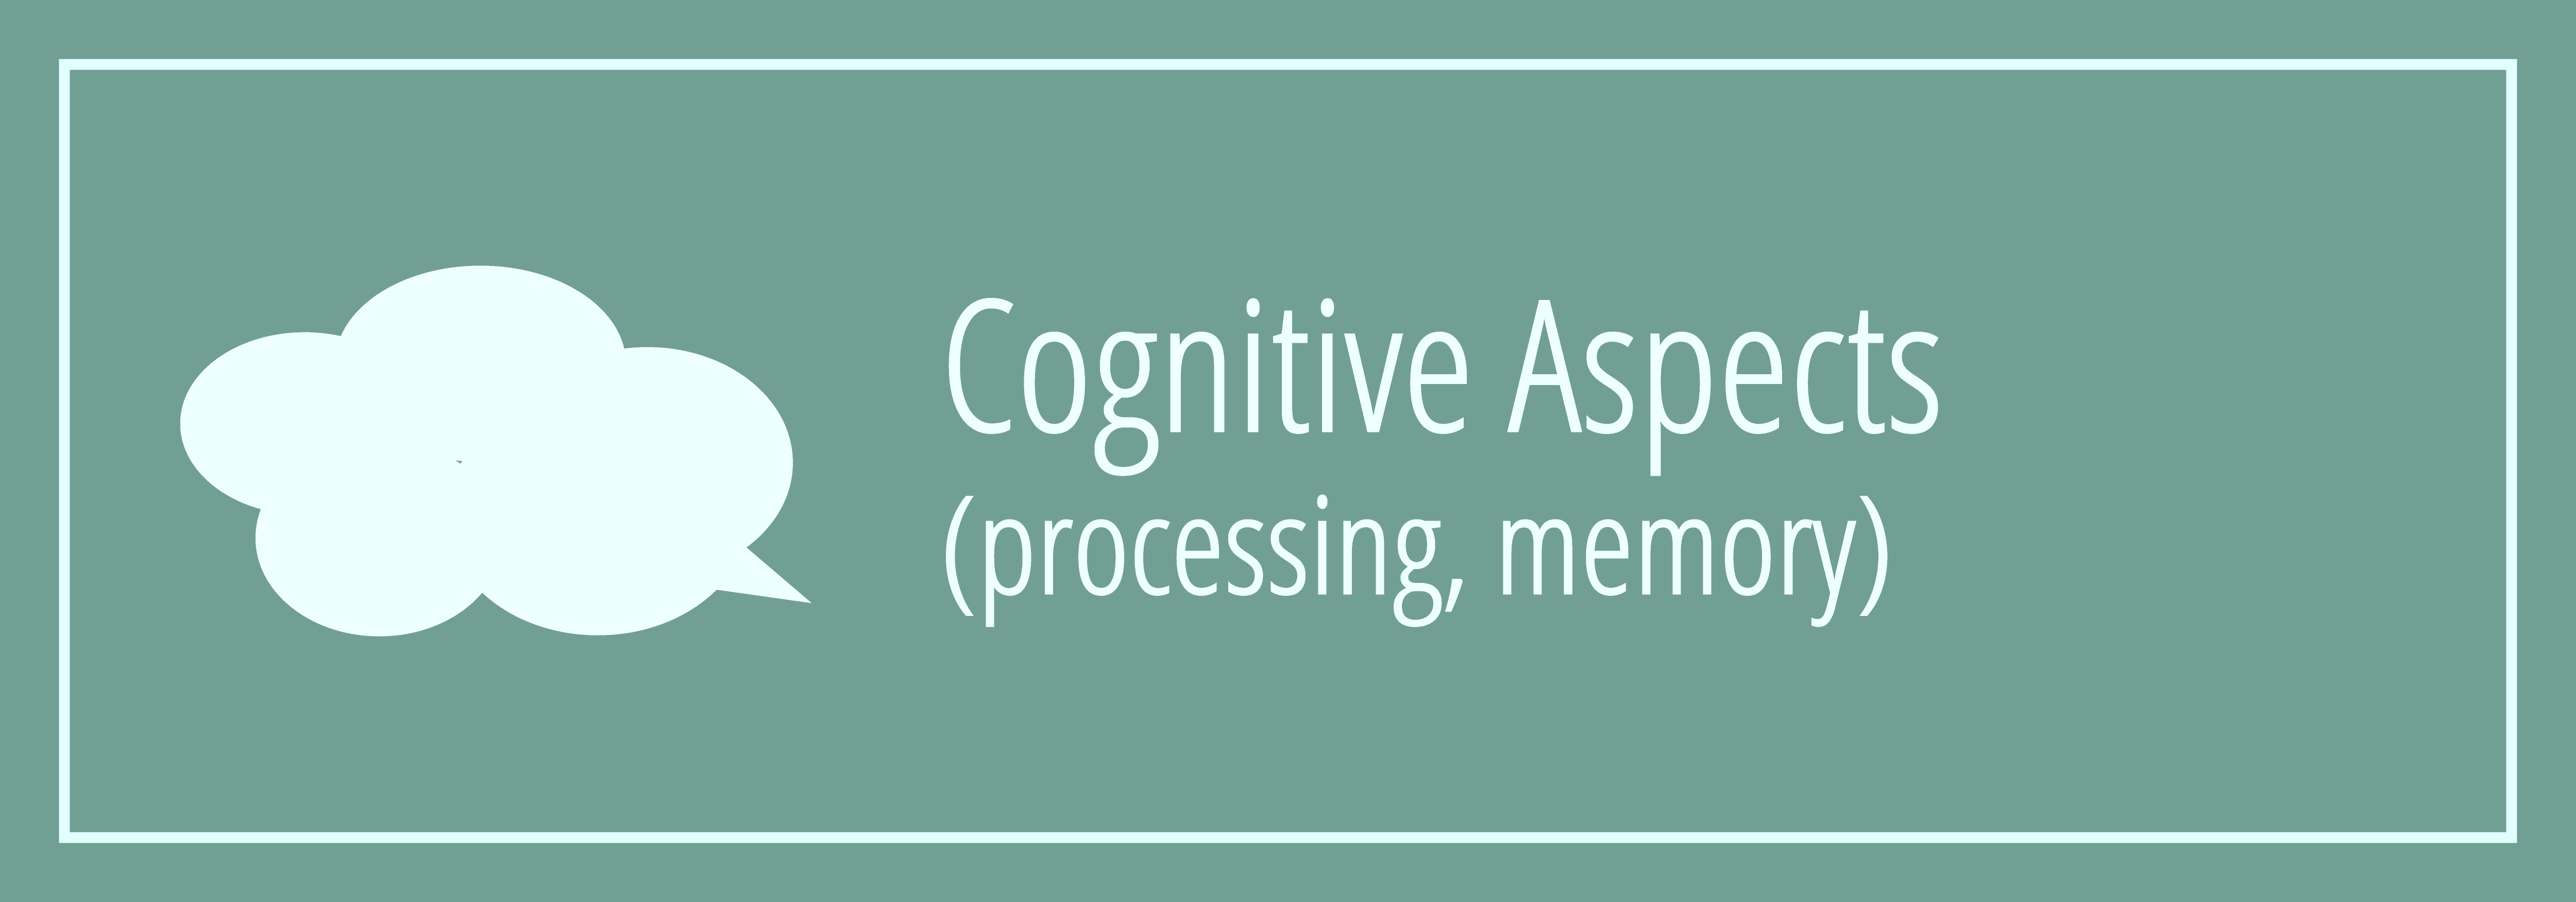 cognitive aspects image